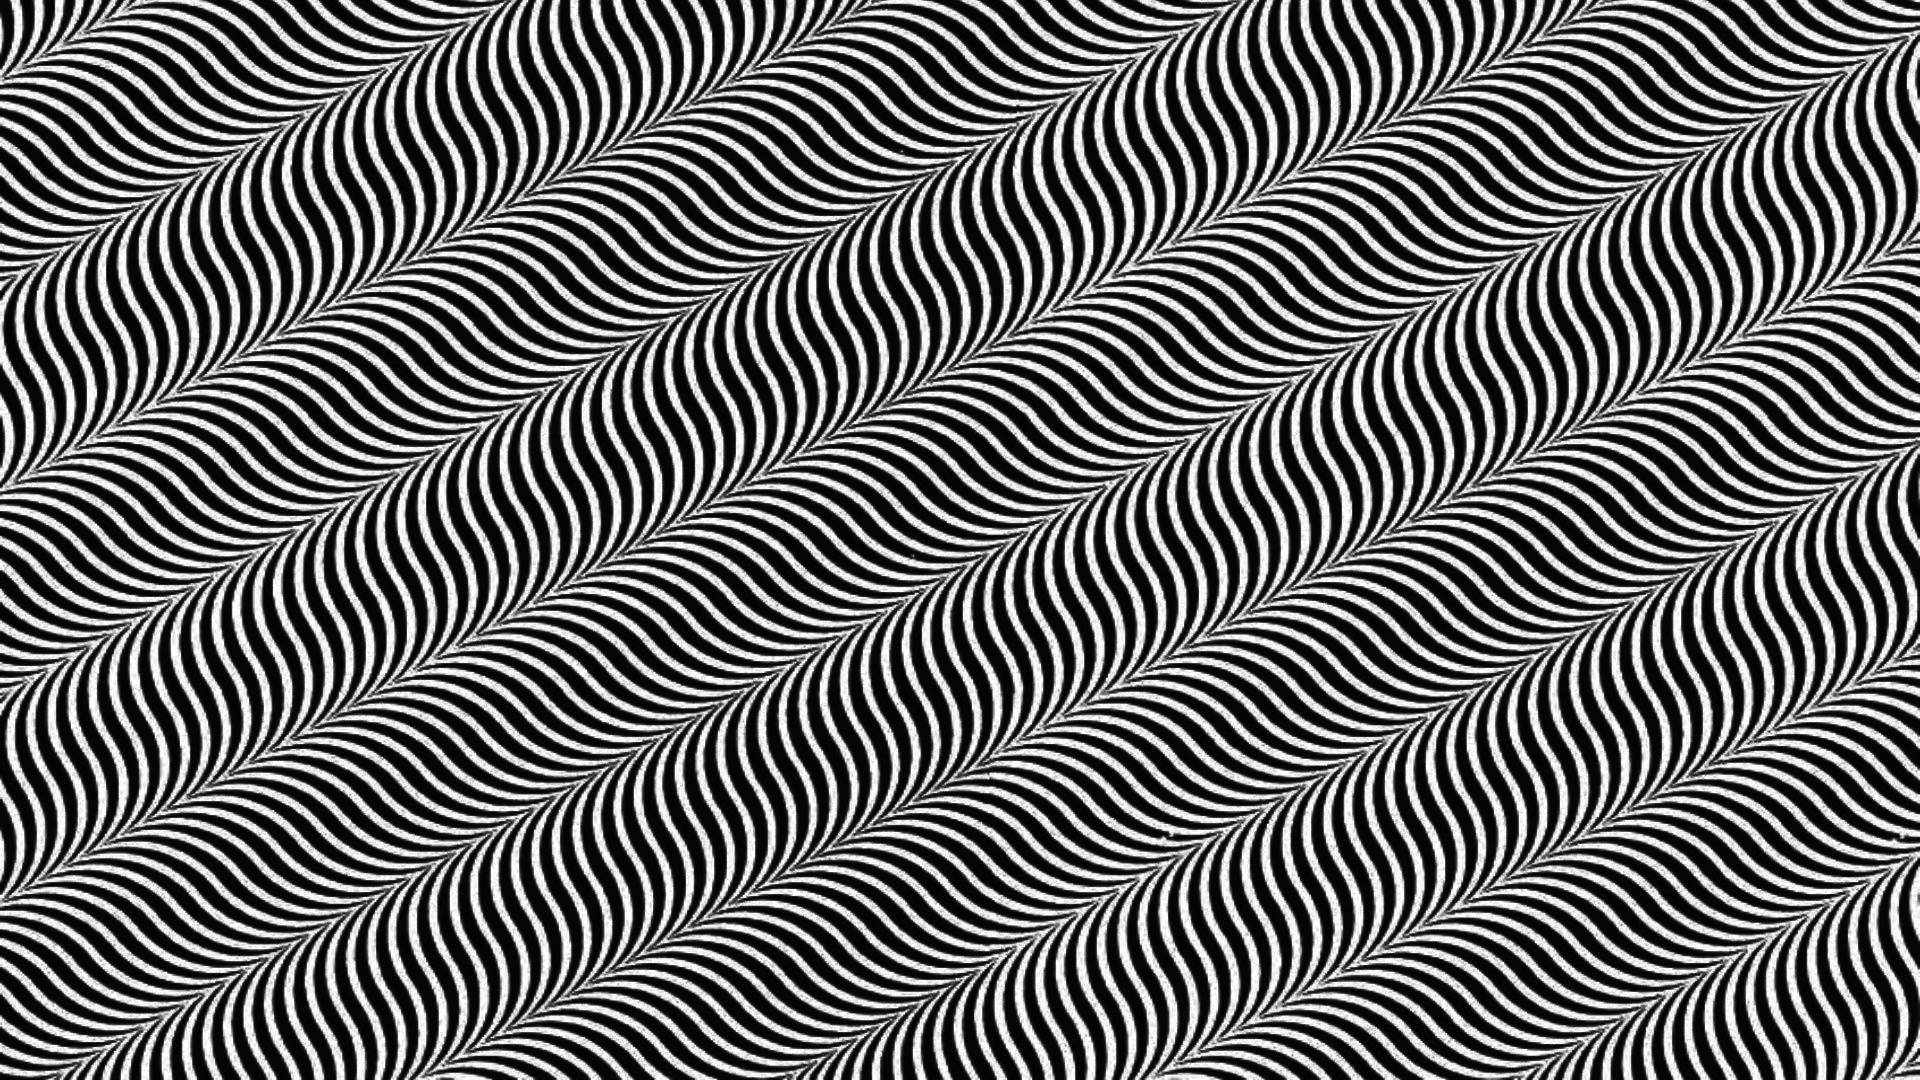 Illusion Swirly Lines Background